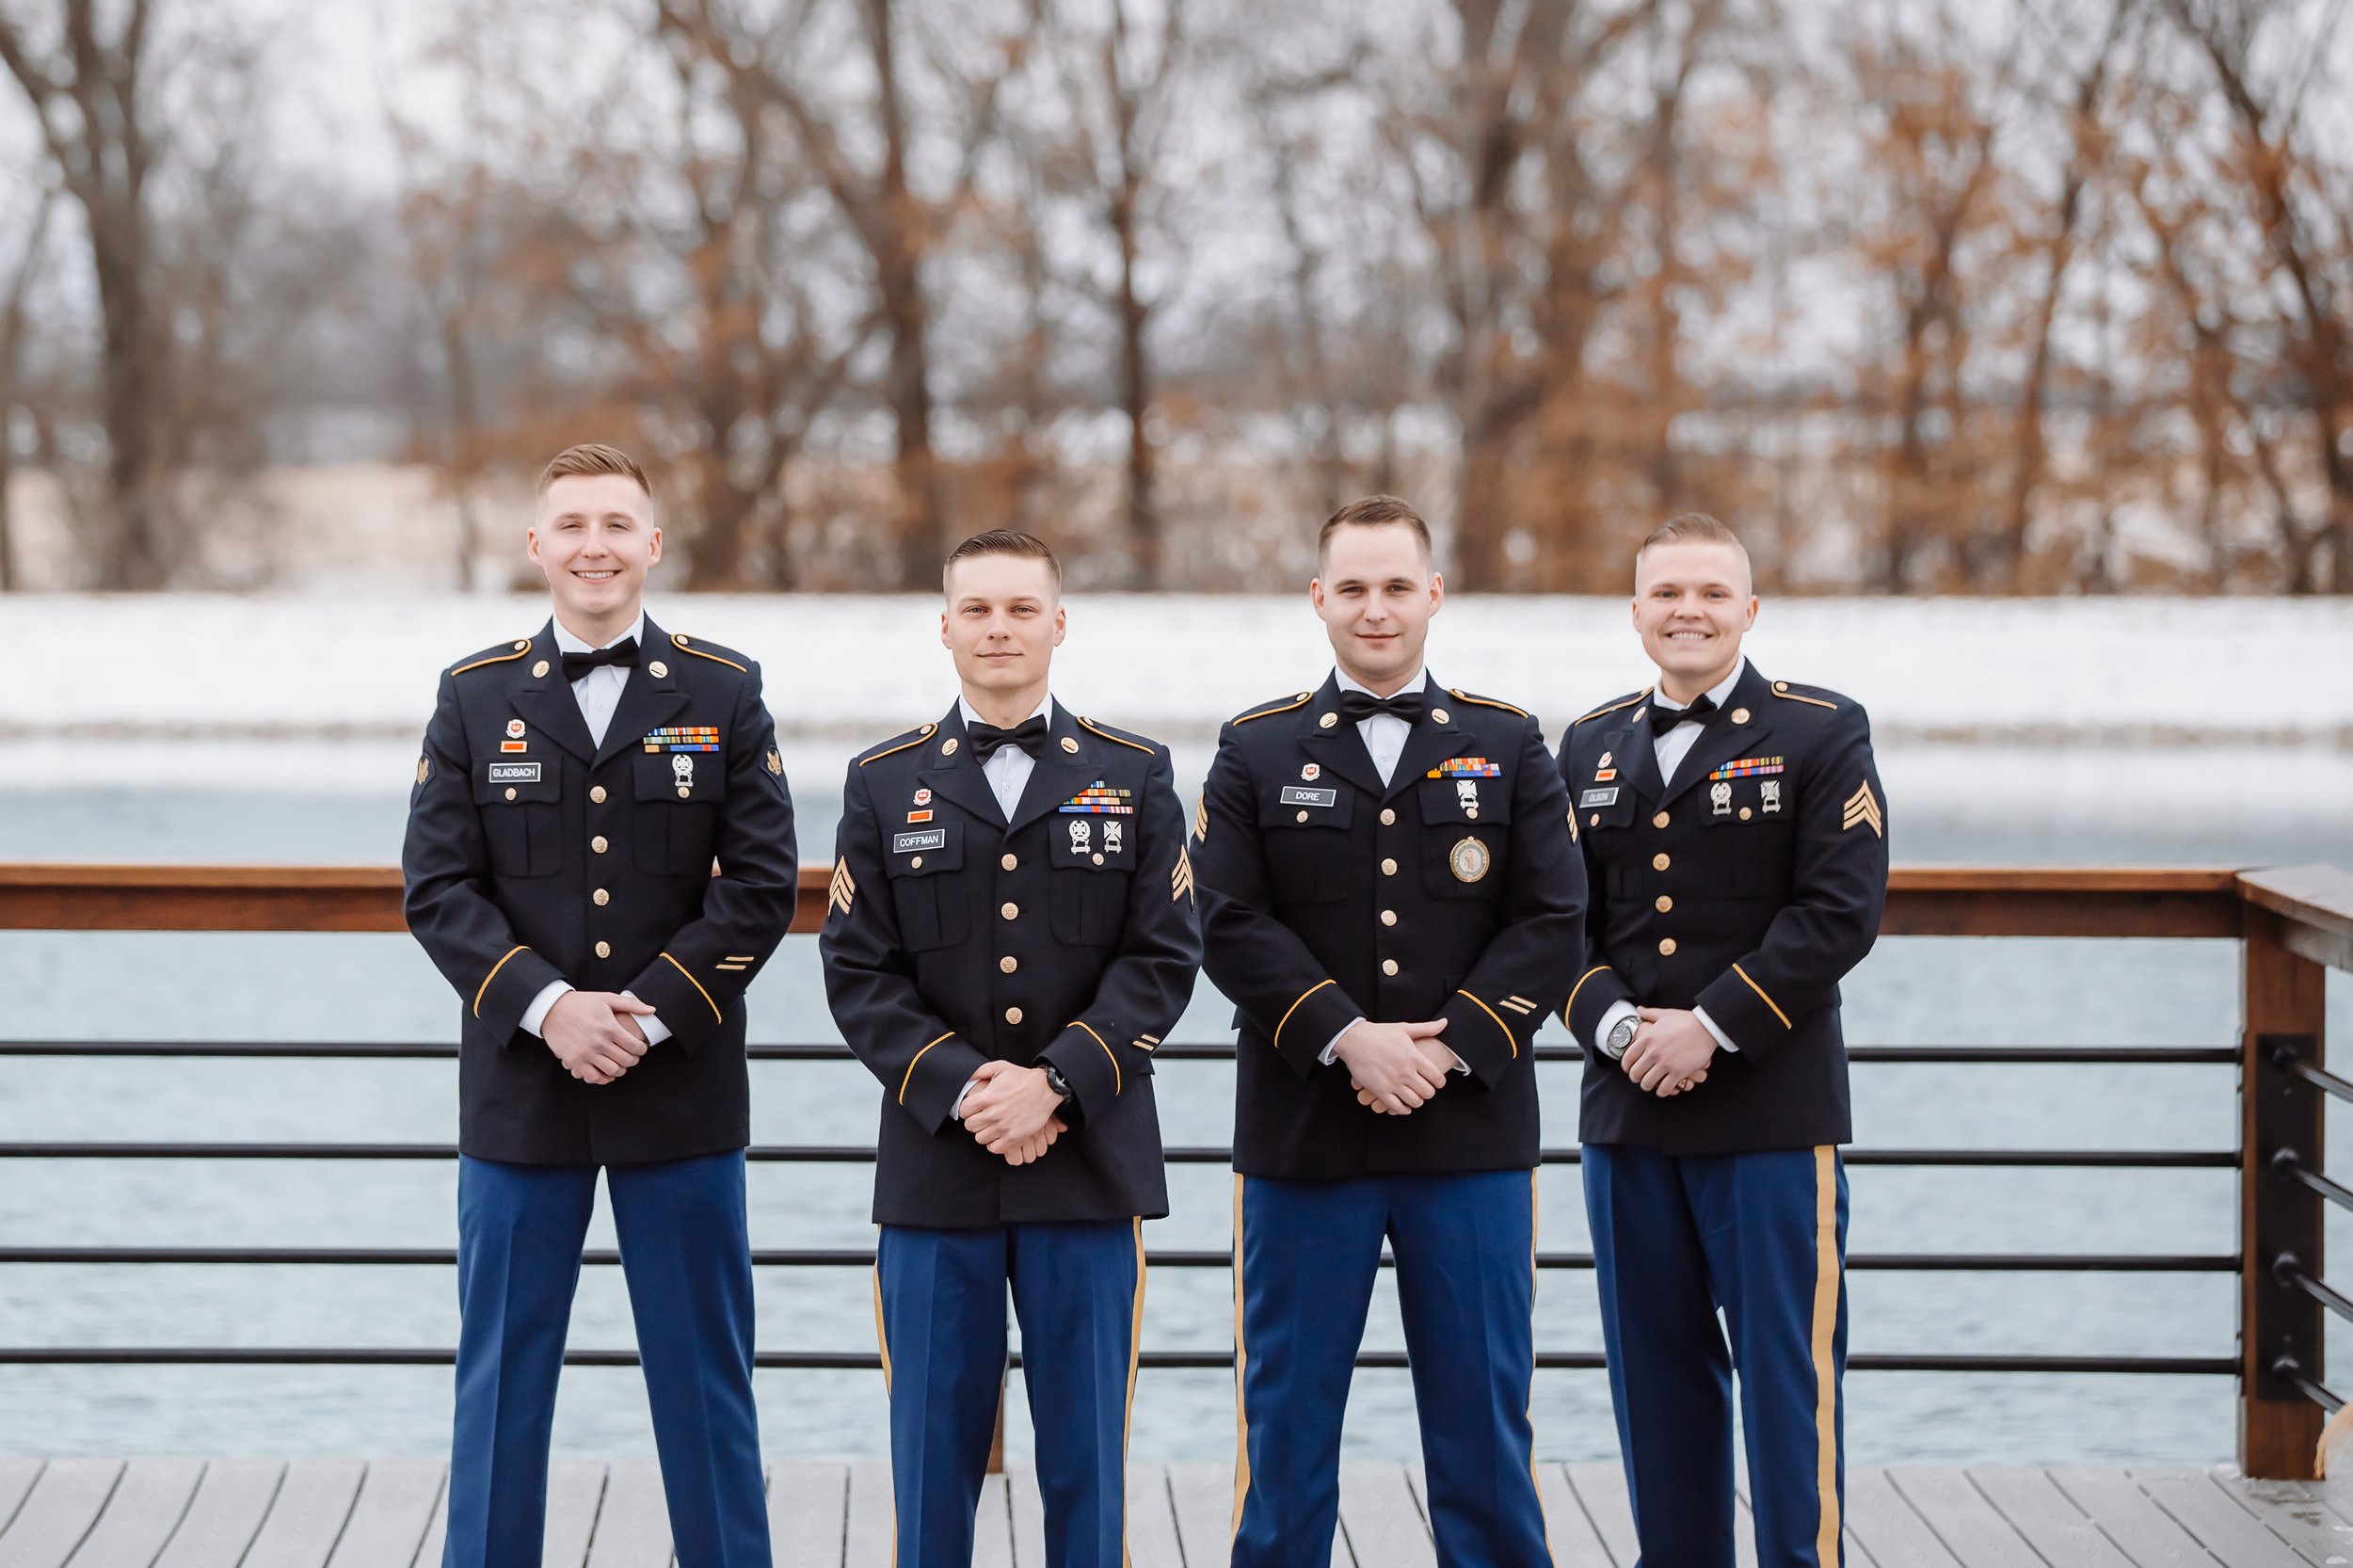 Winter Wedding Missouri Venue Emerson Fields groomsmen bridal party suit military wedding marine.jpg